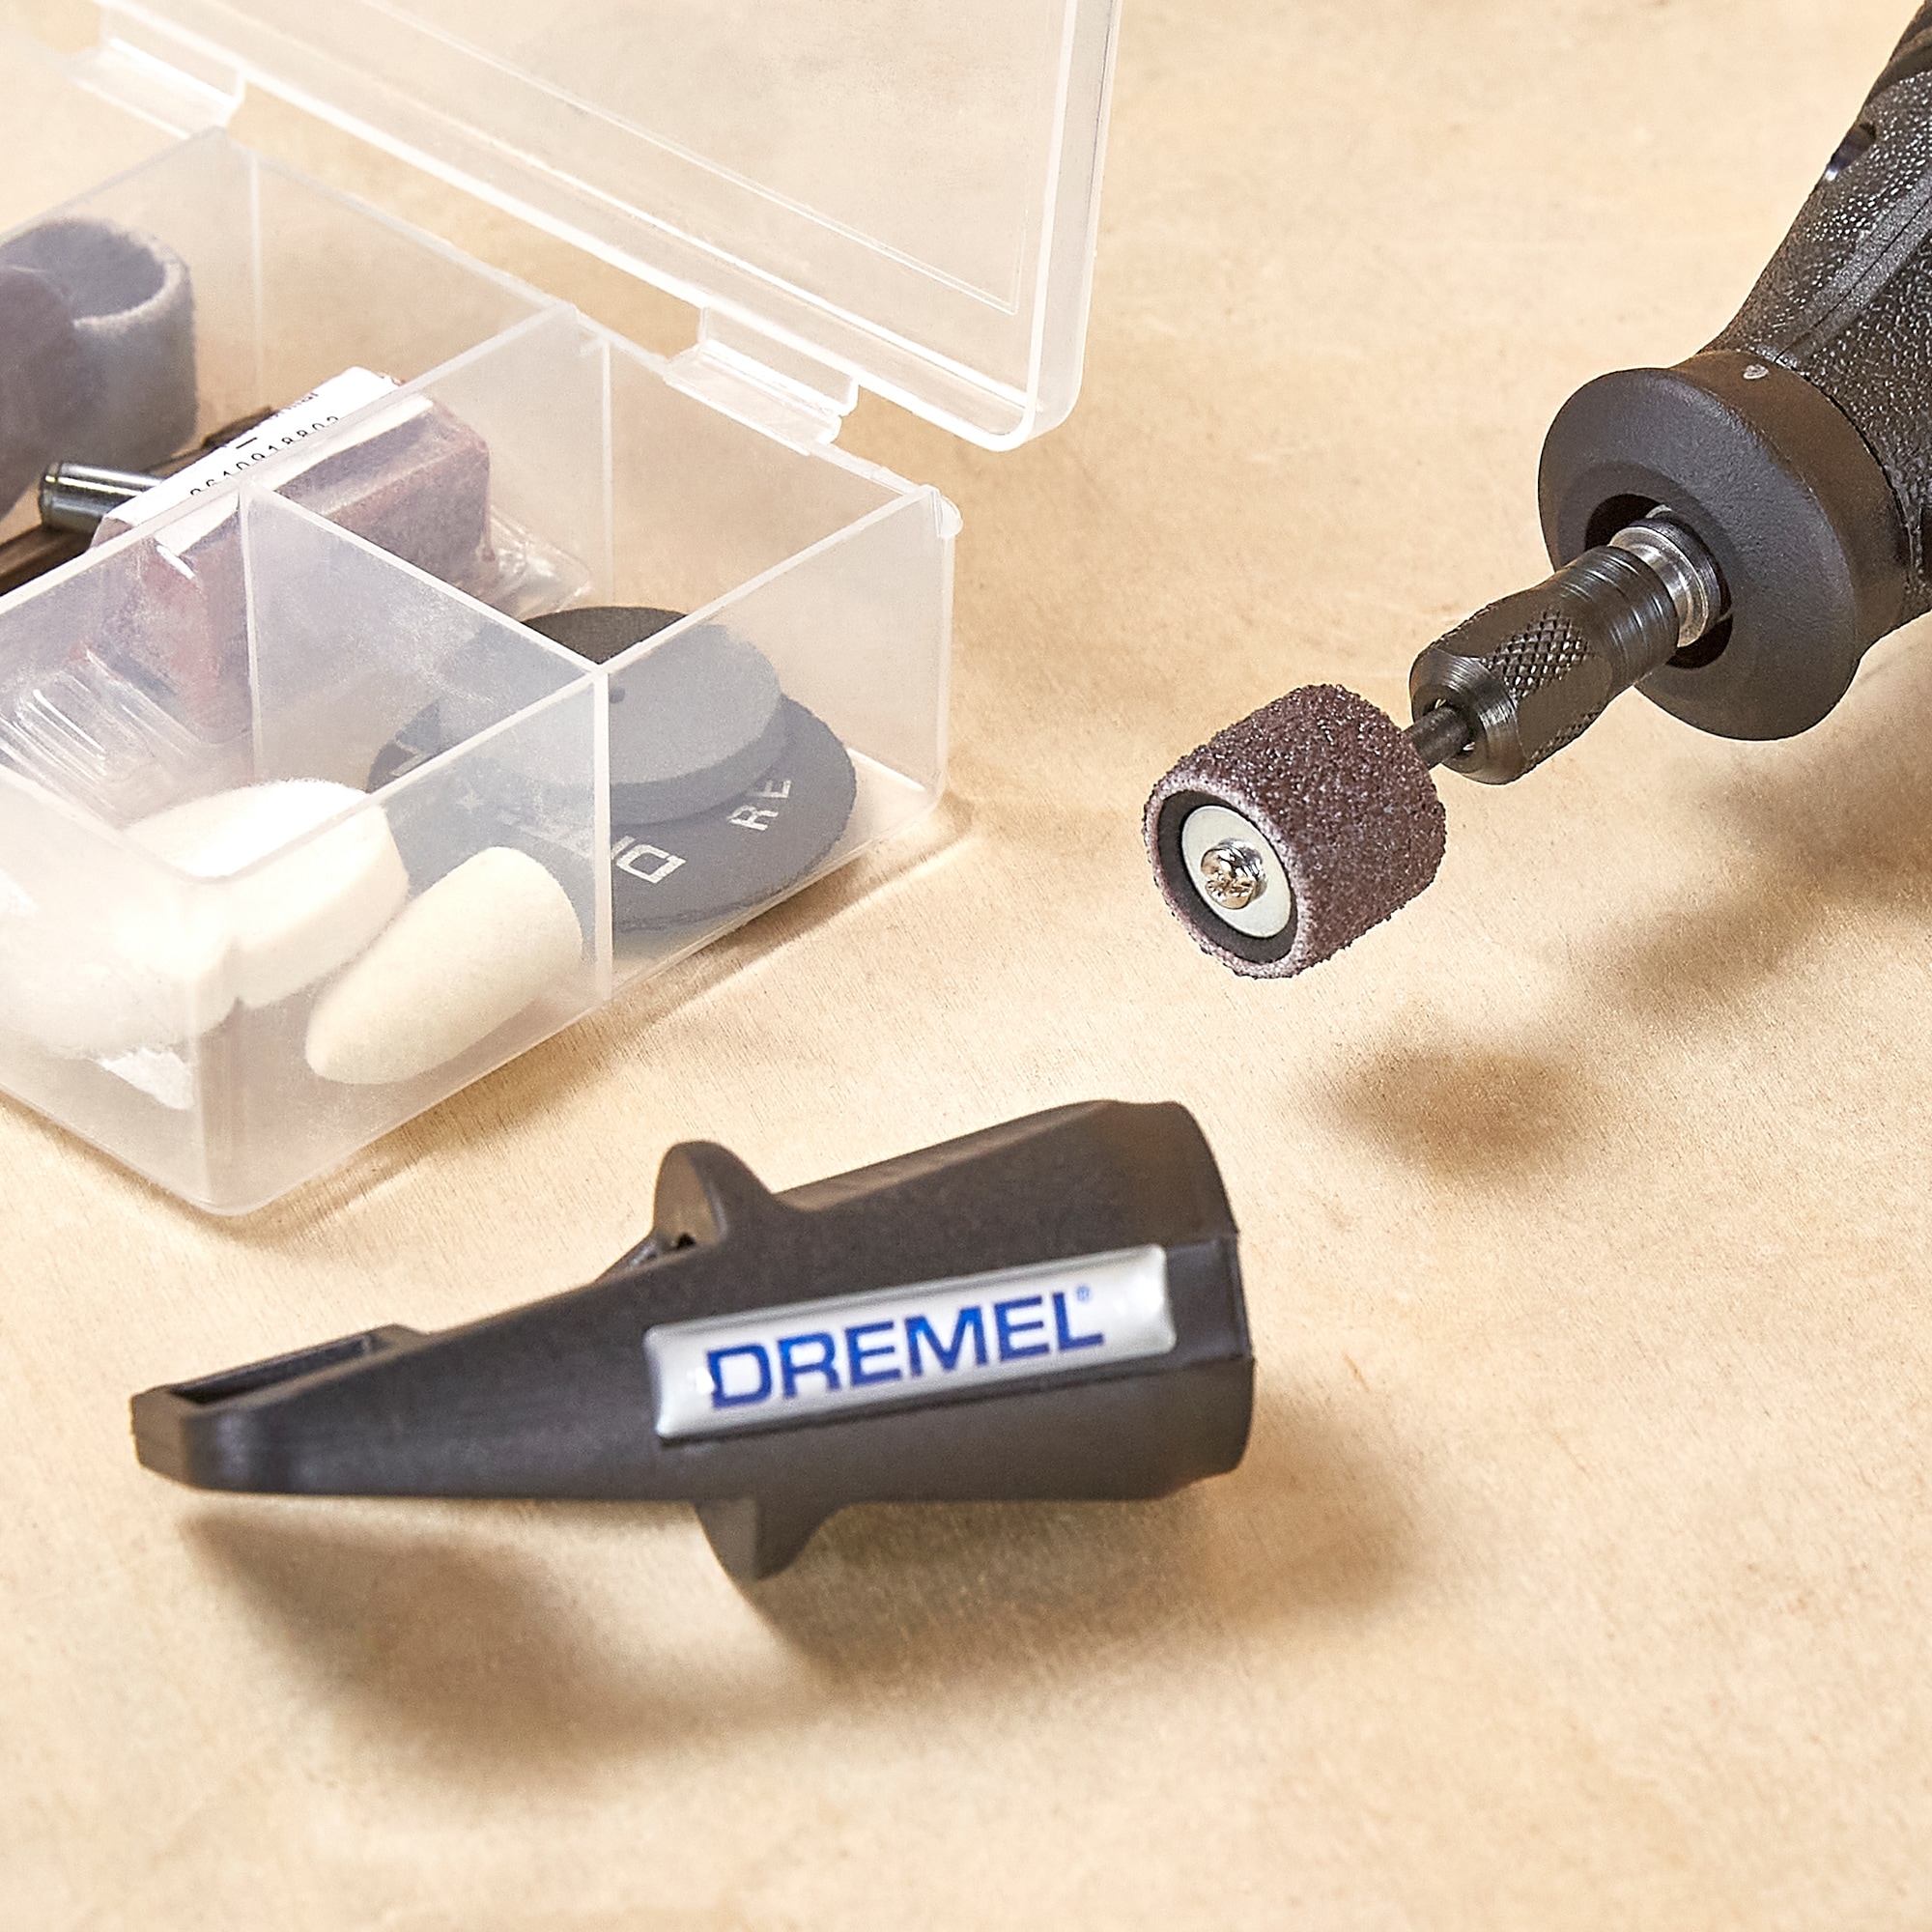 Dremel 200-1/21 Two-Speed Mini Rotary Tool Kit